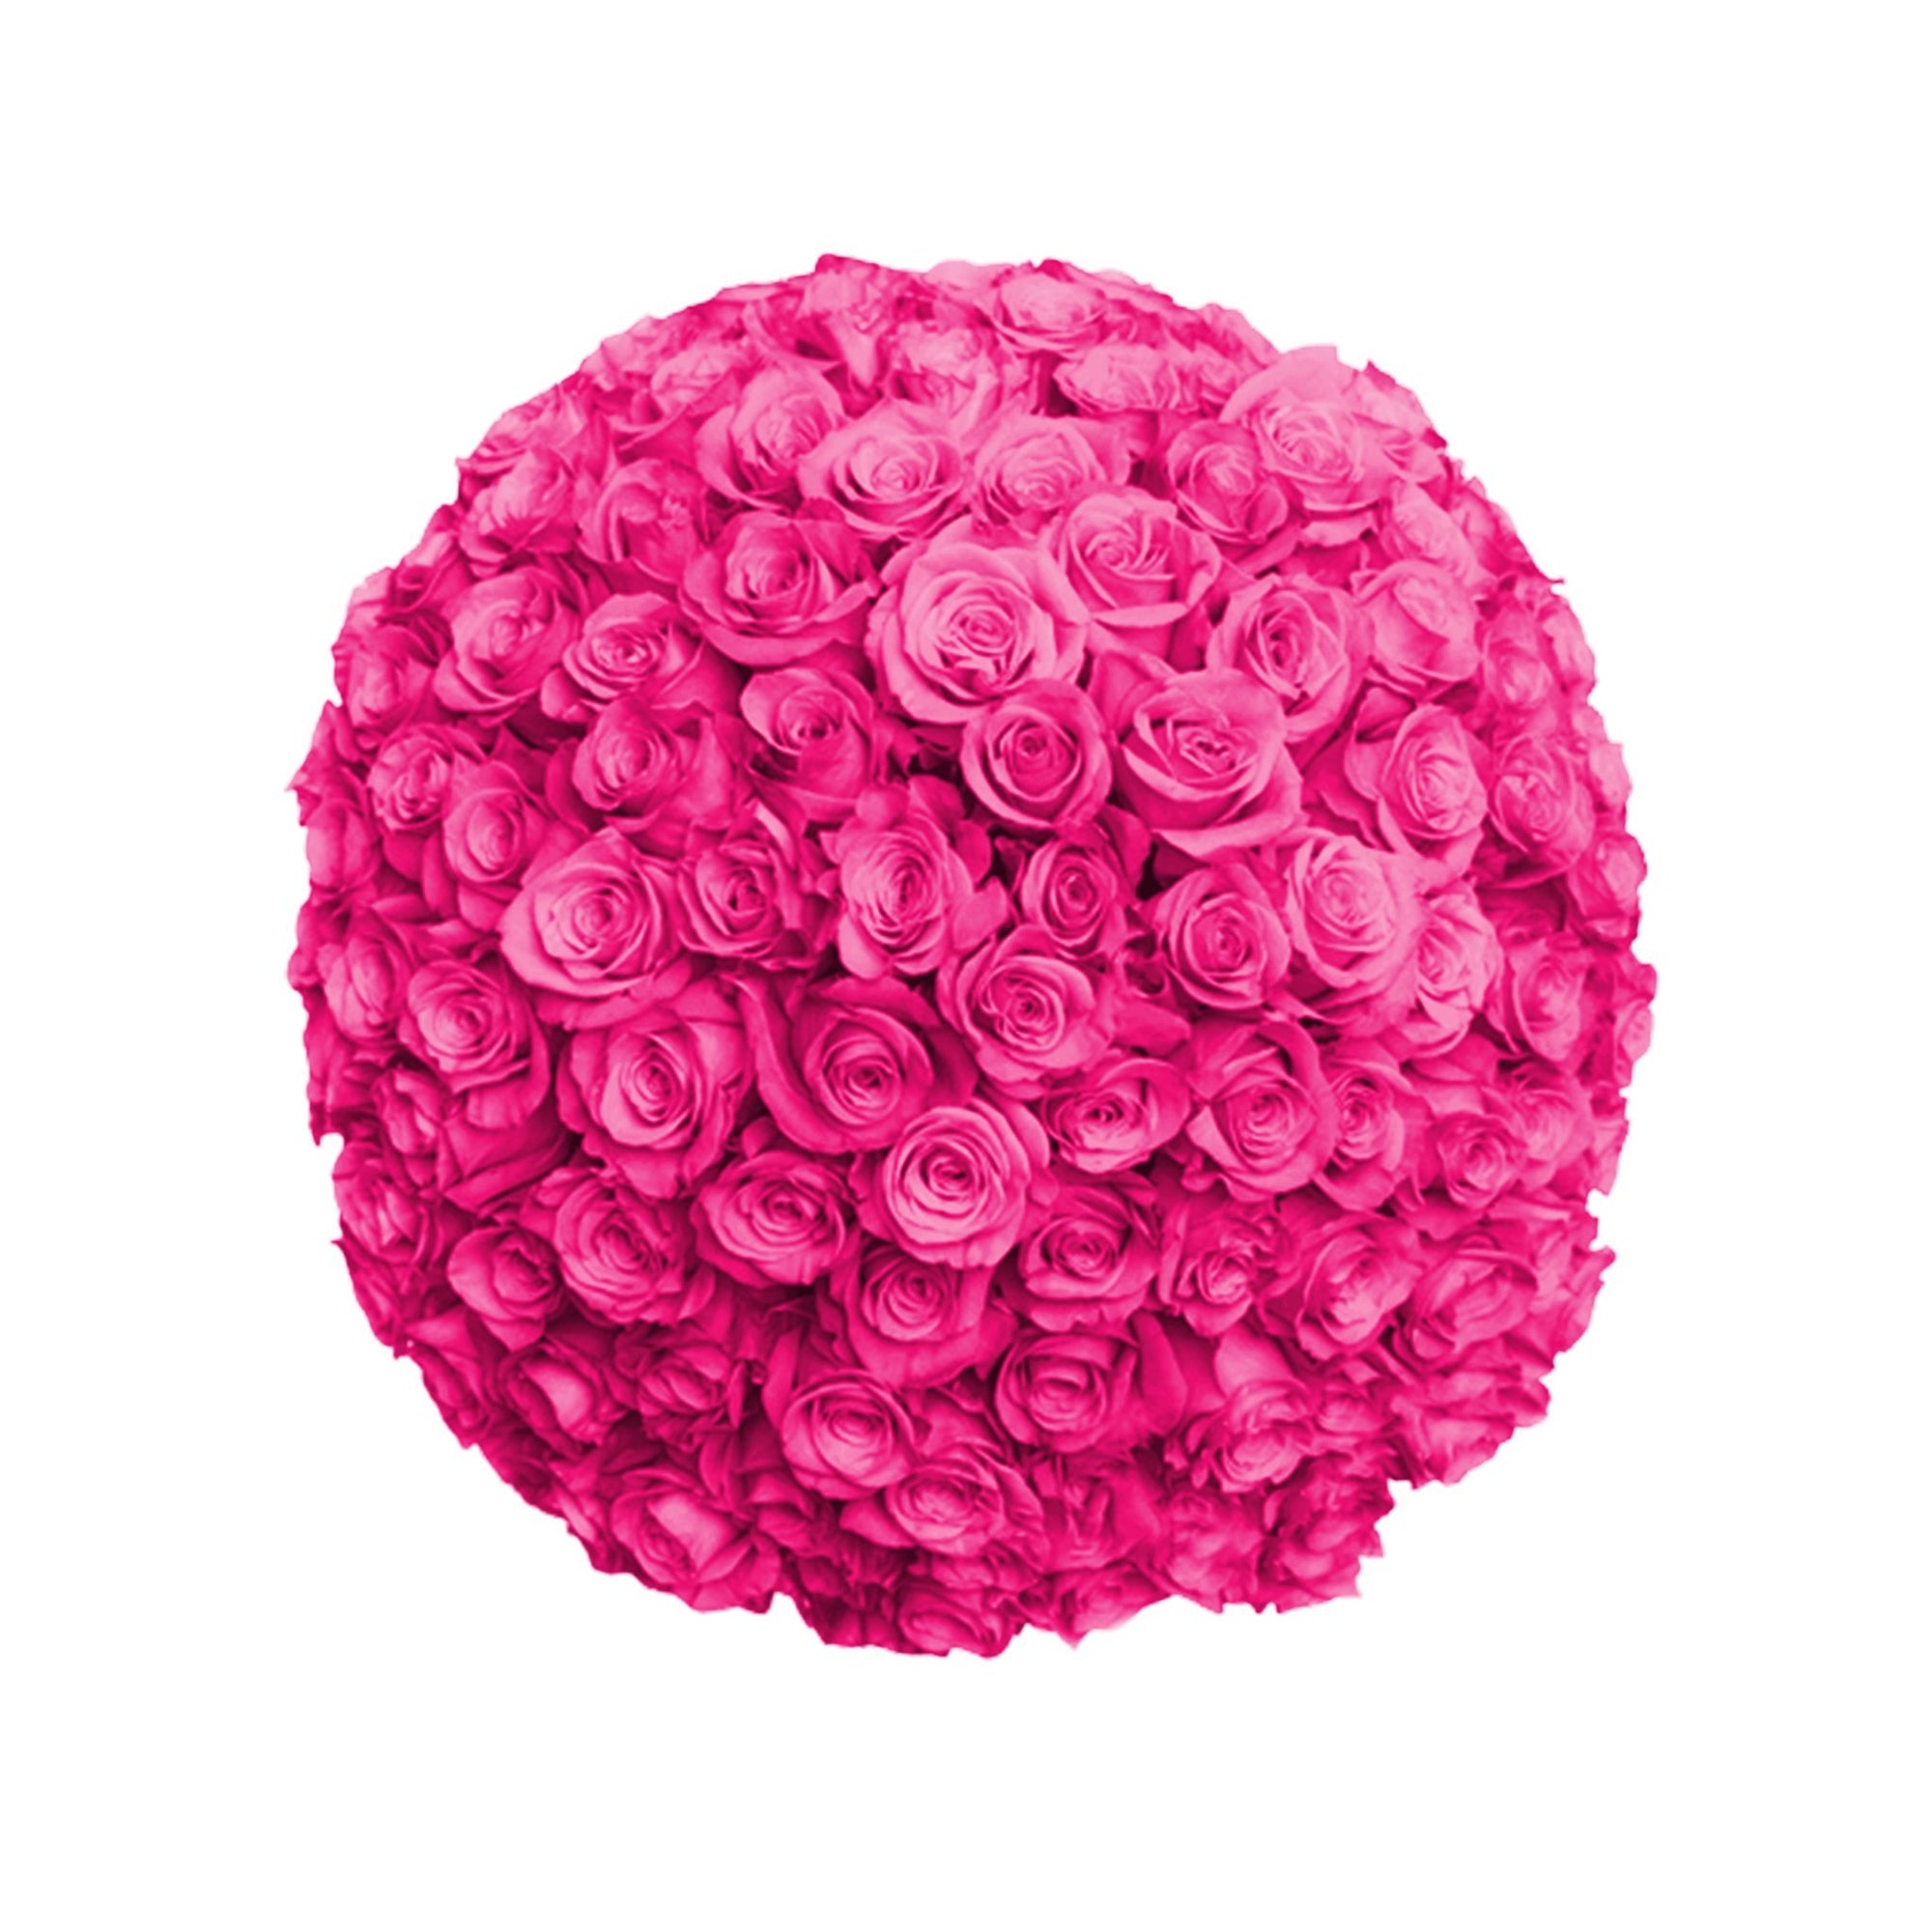 Manhattan Flower Delivery - Fresh Roses in a Vase | 100 Hot Pink Roses - Roses